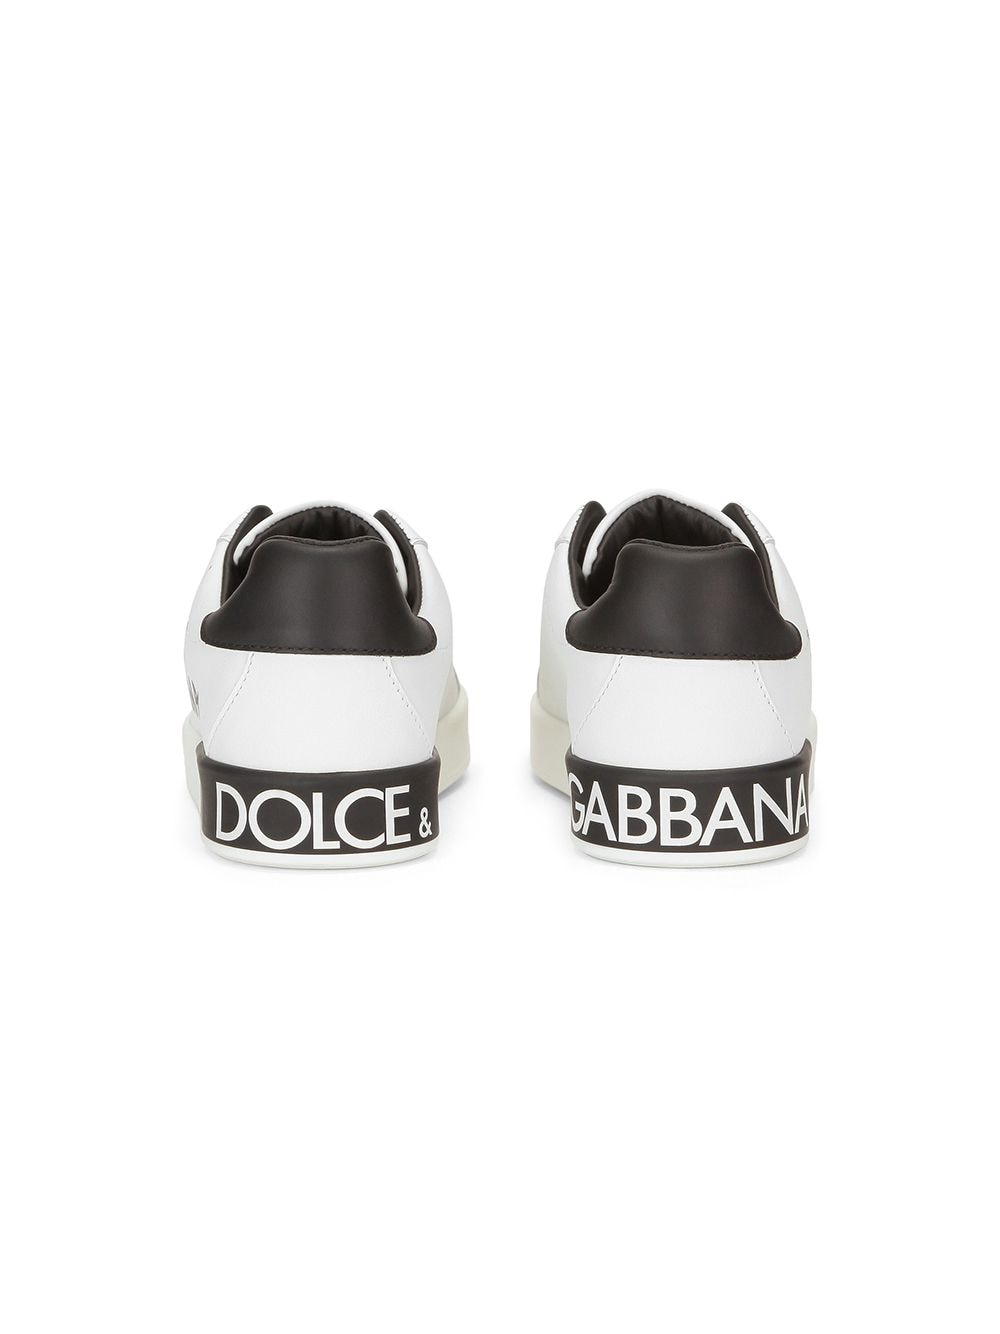 фото Dolce & gabbana kids кроссовки portofino custom с логотипом